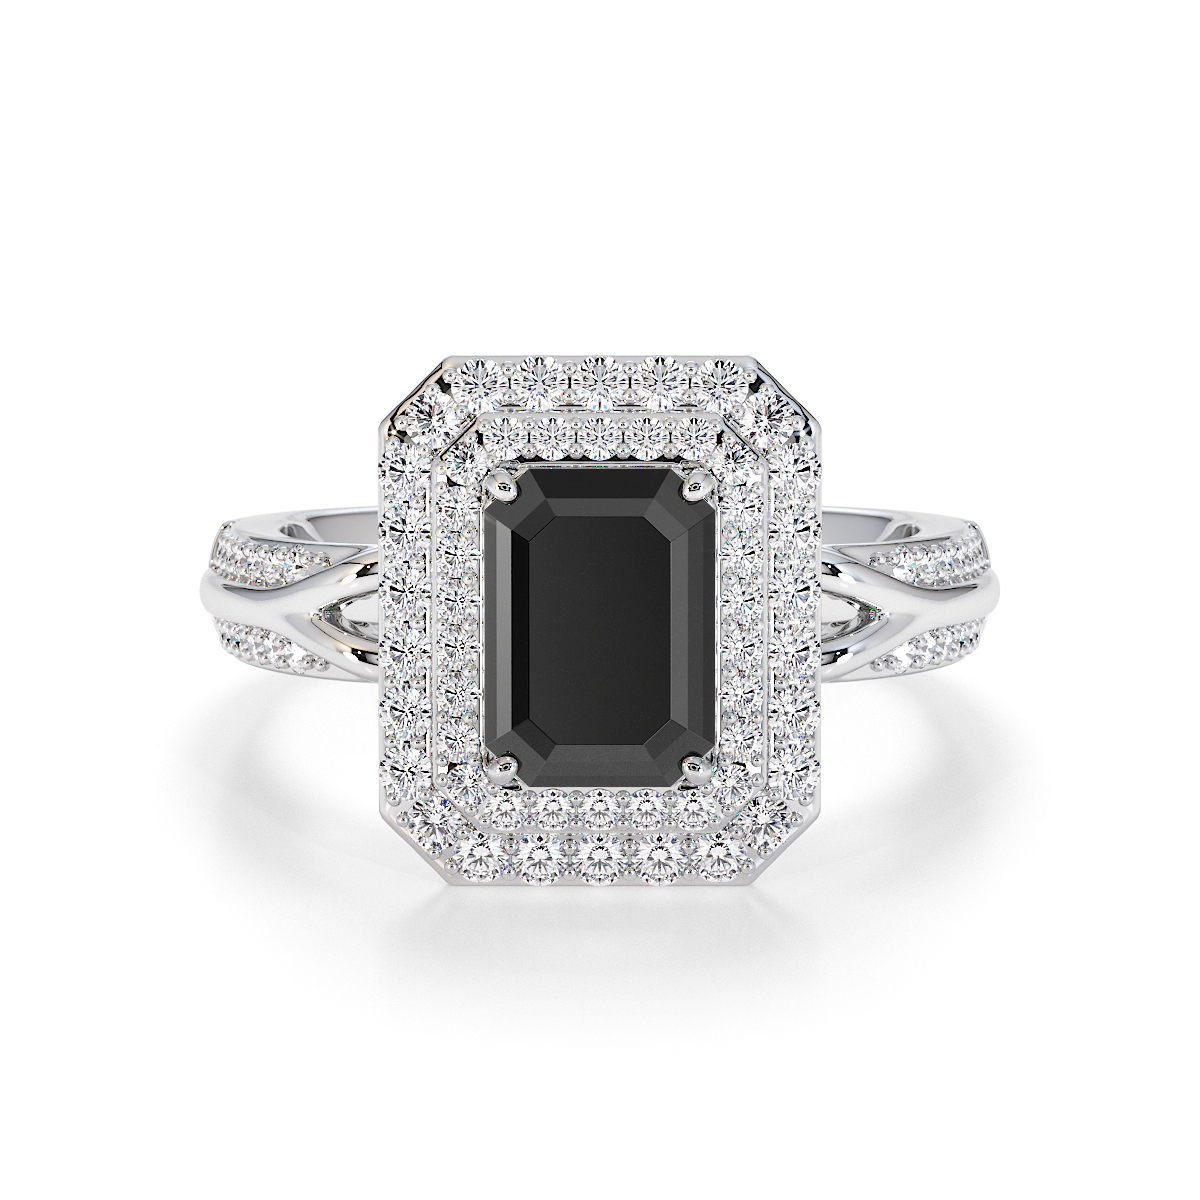 Buy Platinum Diamond Rings - Engagement & Wedding Rings Price